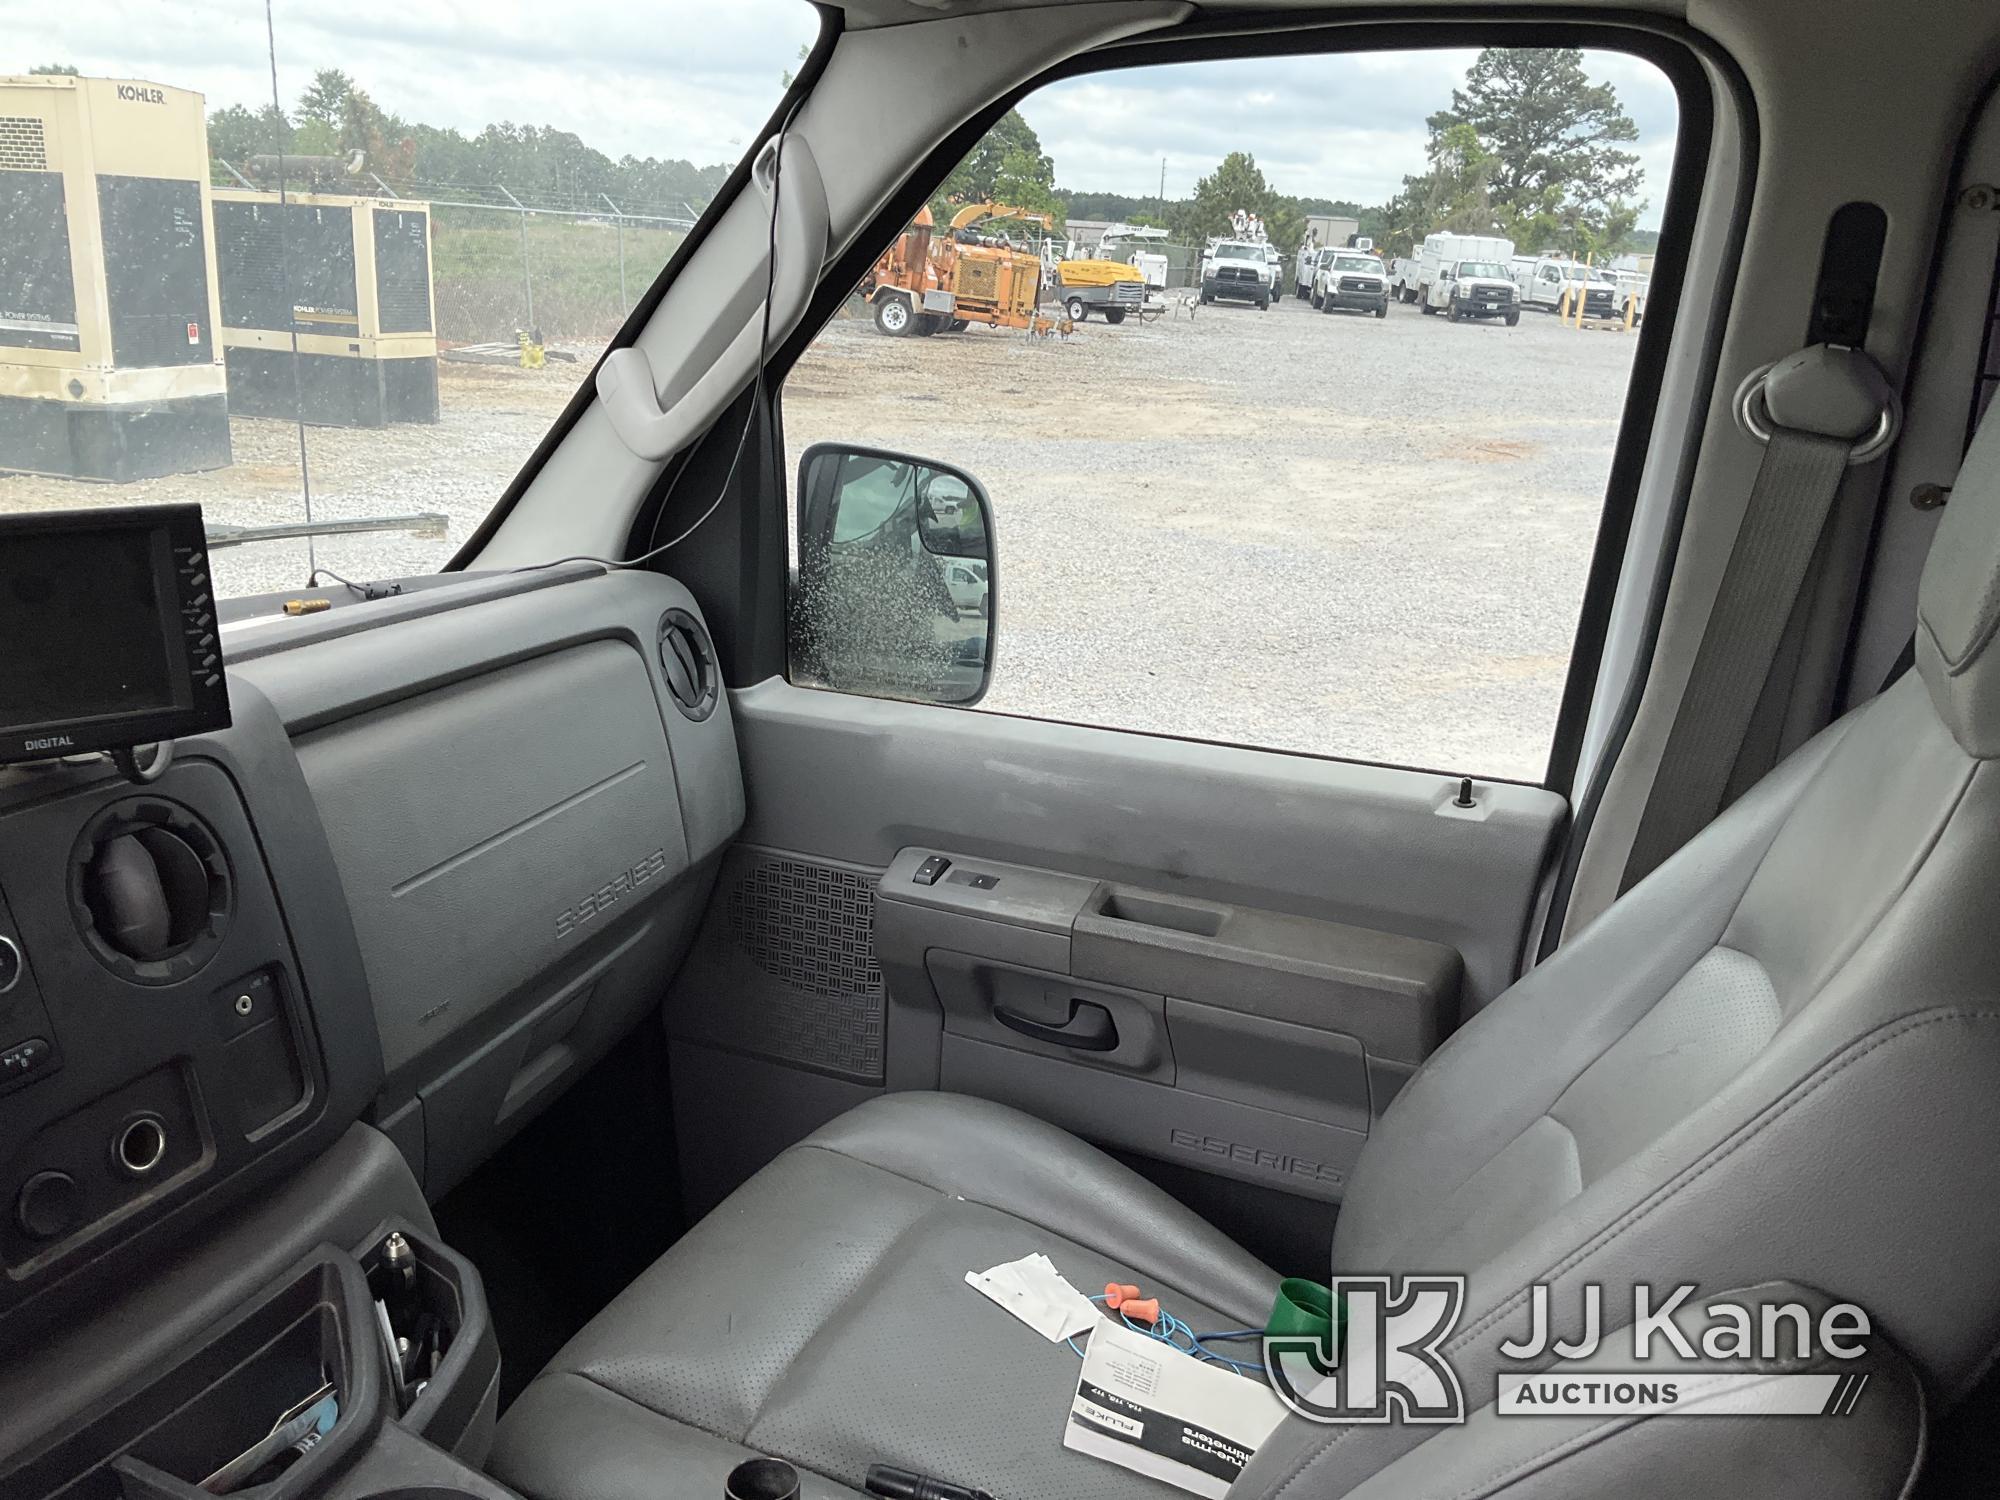 (Villa Rica, GA) 2010 Ford E250 Cargo Van No Key, Not Running, Condition Unknown, Body Damage